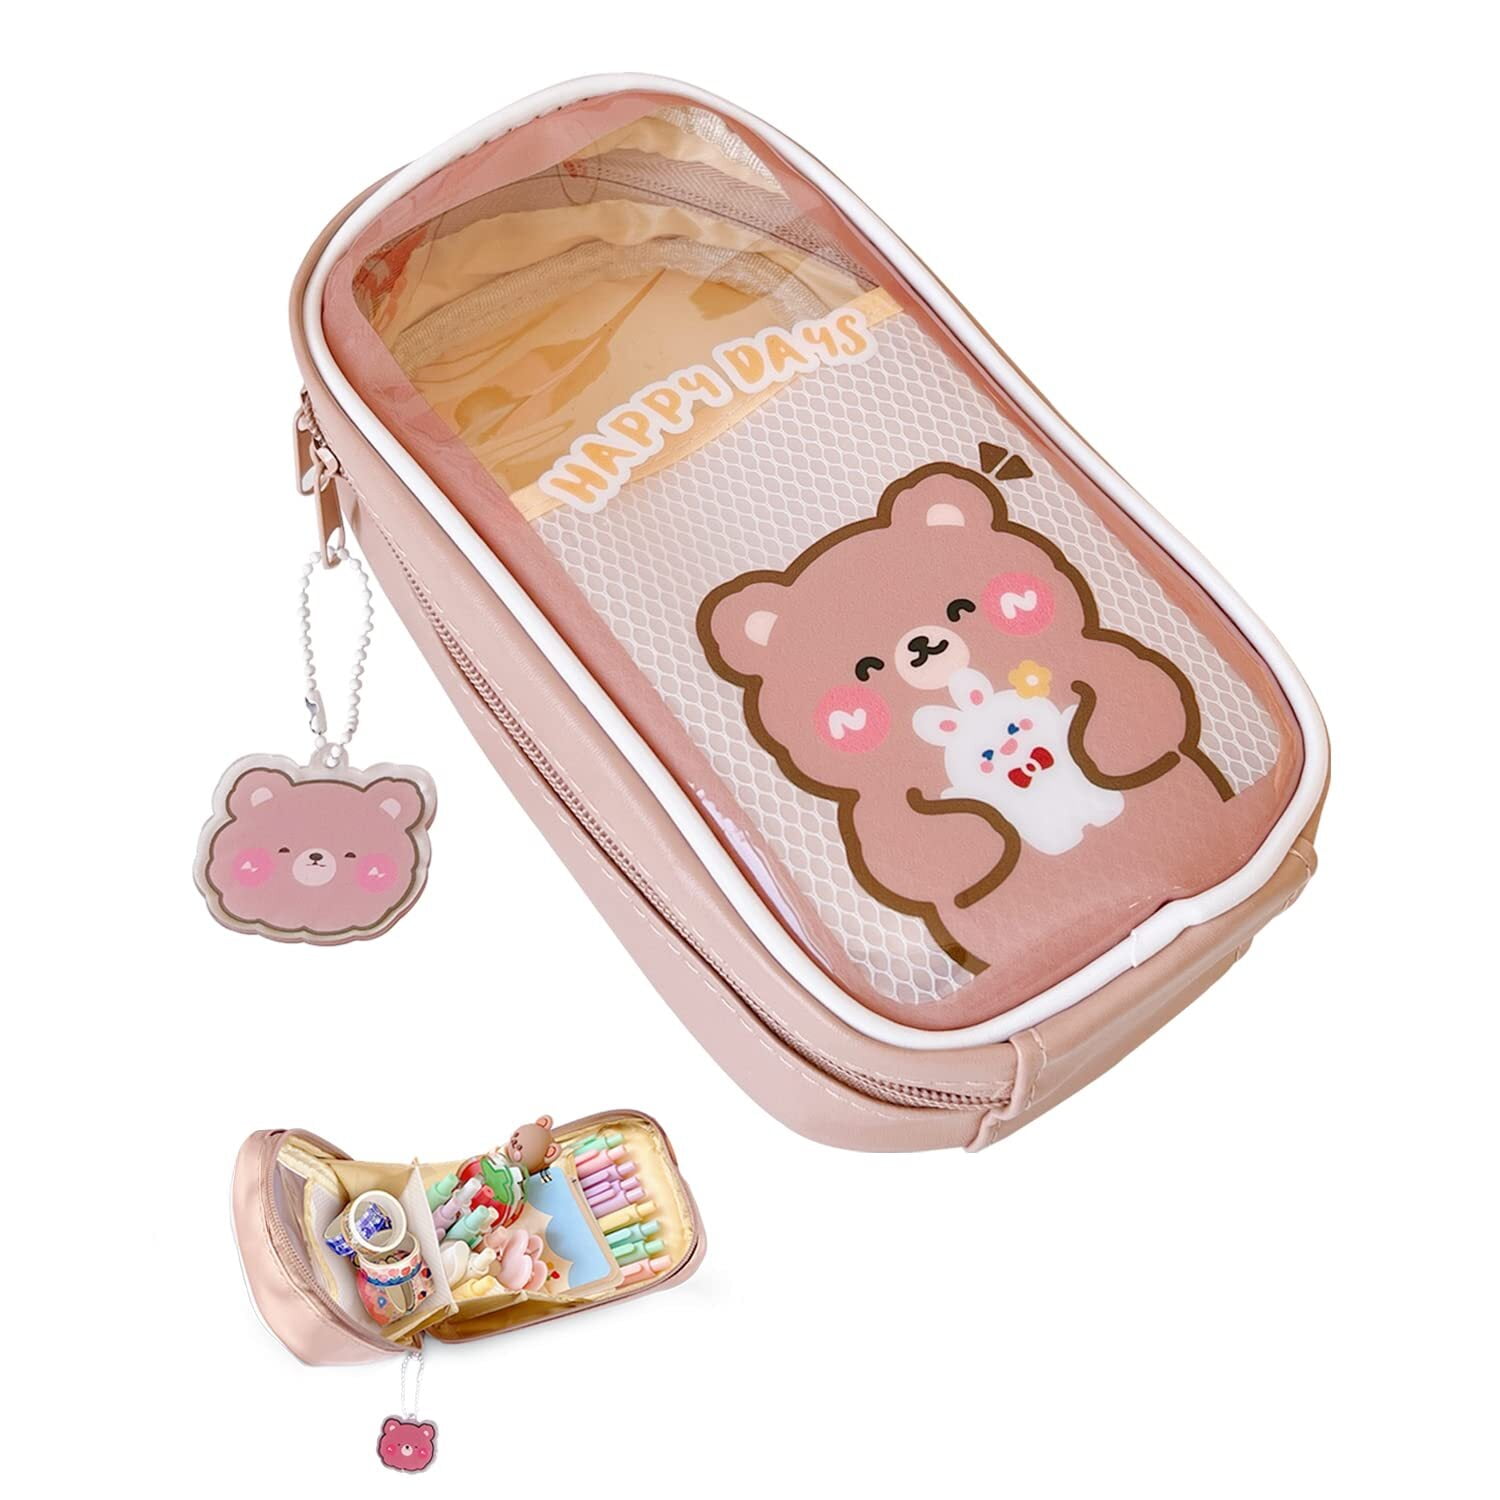 clberni Cute Brown Bear Pencil Case, Aesthetic Pencil Pouch, Kawaii School Supplies Makeup Bag for Girl Women Adult, Size: 8.54 x 4.52 x 2.36